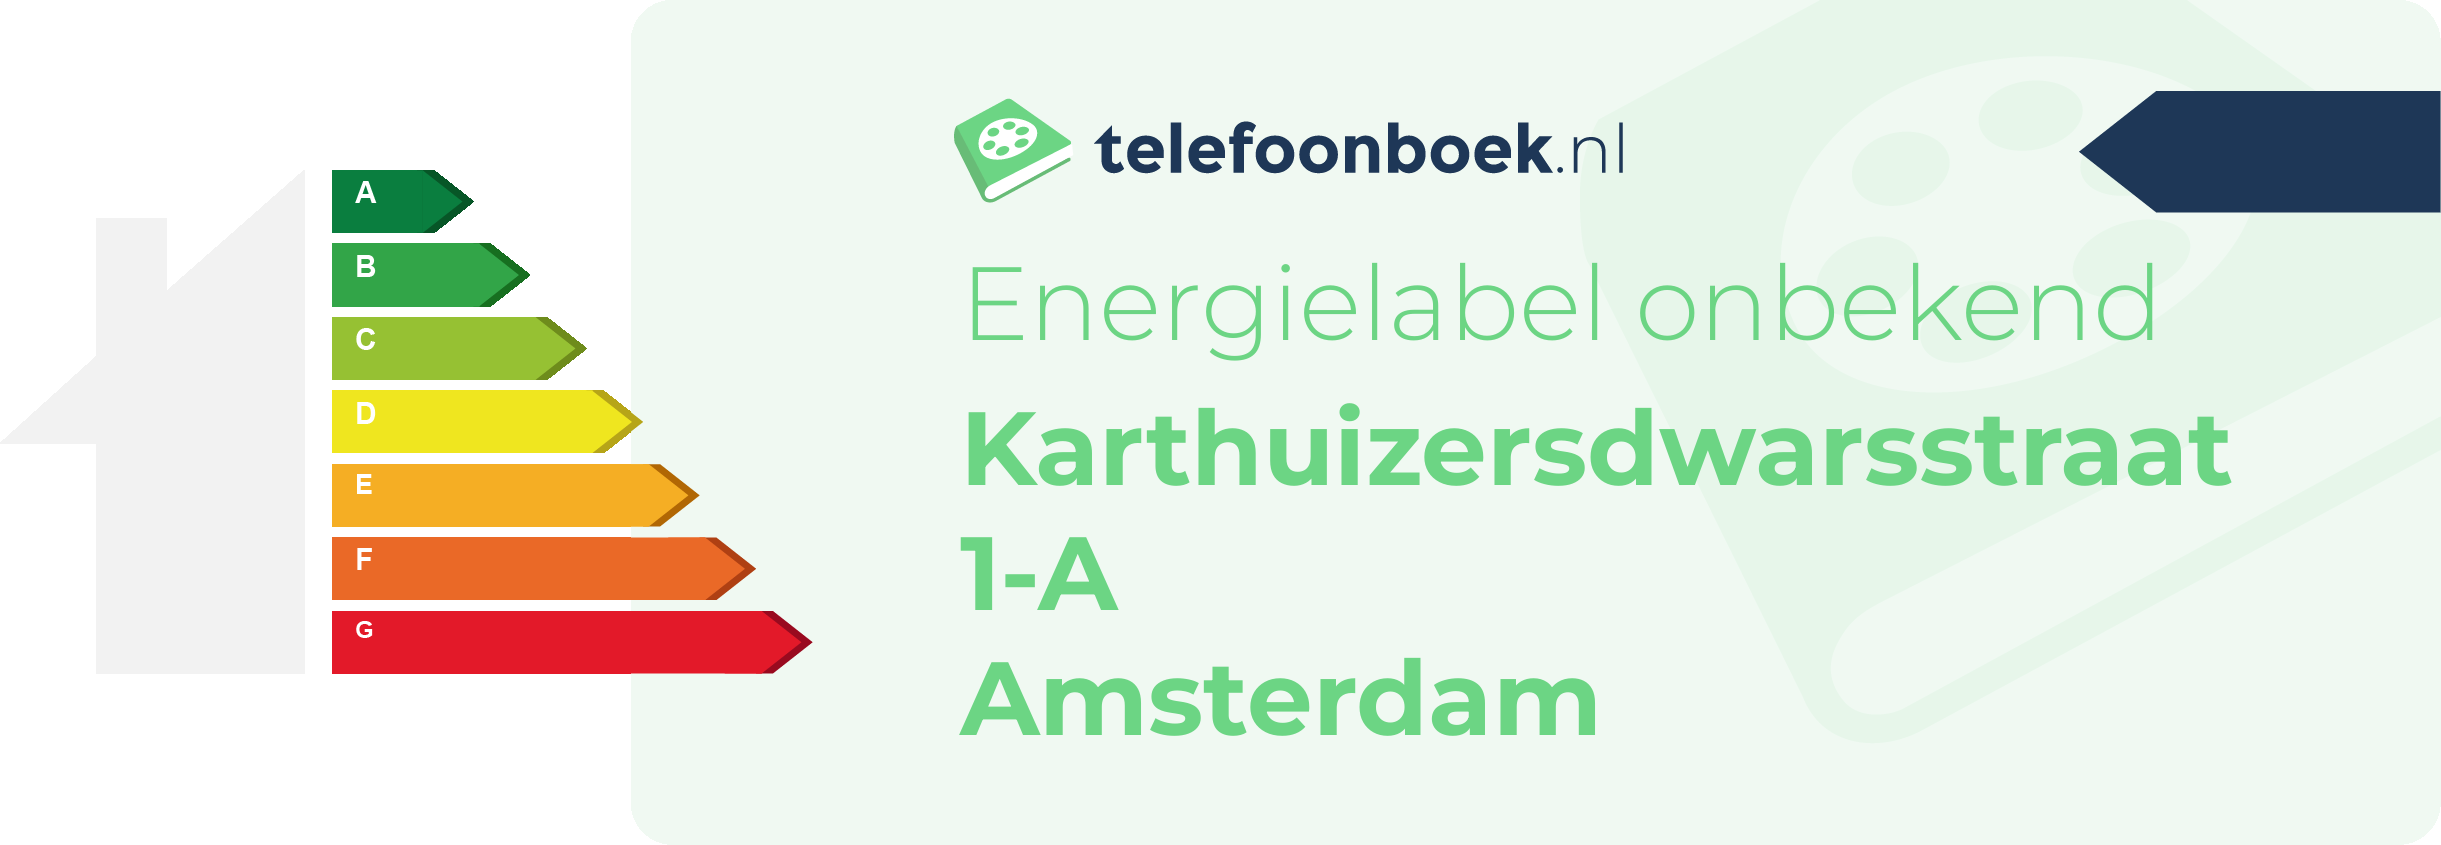 Energielabel Karthuizersdwarsstraat 1-A Amsterdam